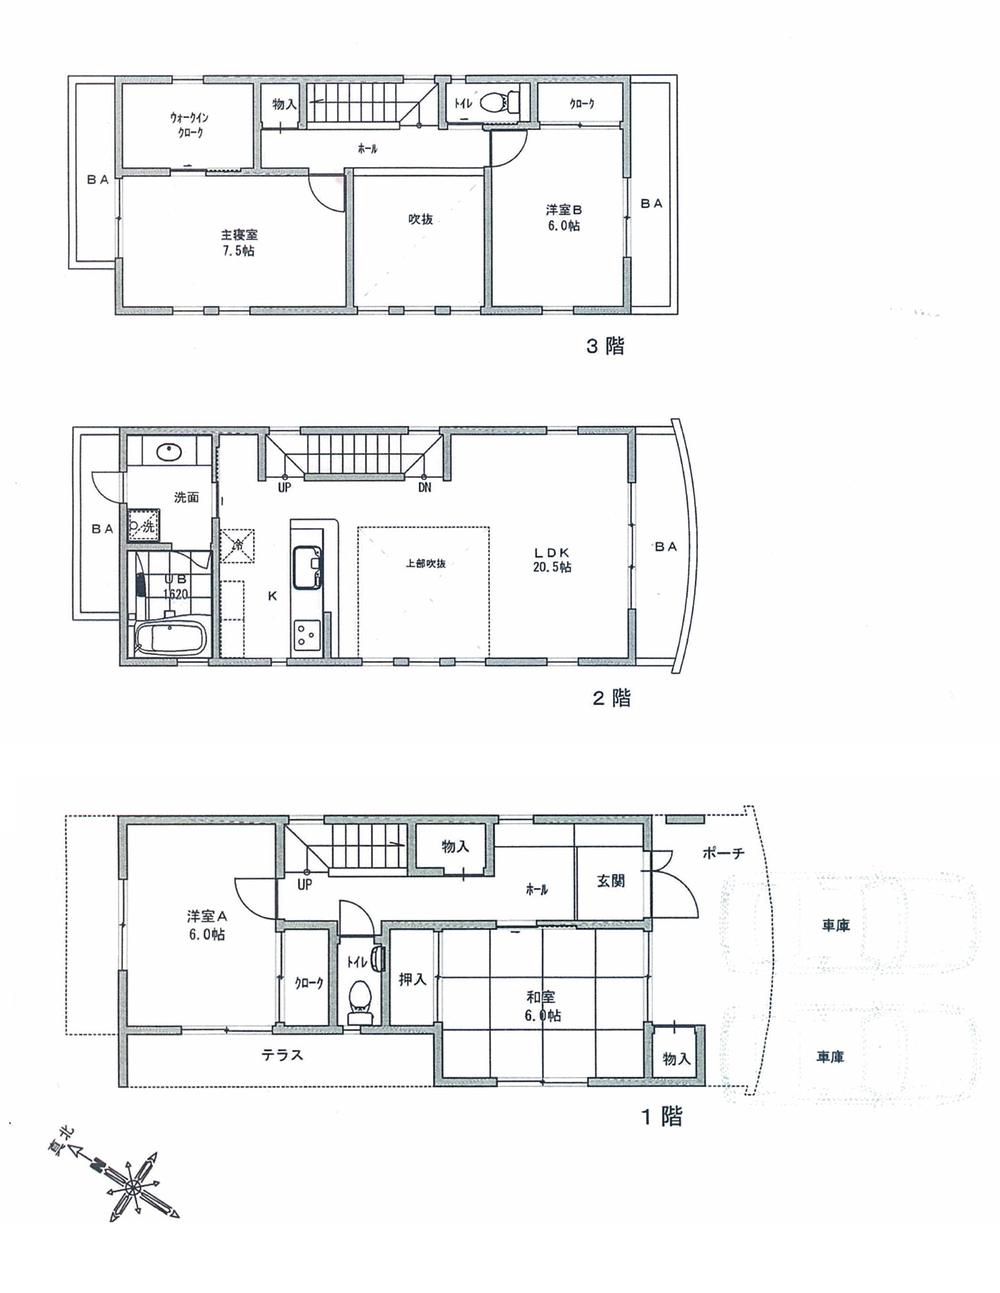 Building plan example (floor plan). Building plan Example B (2 cars parking space) Building price 2,190 yen  Building area 120.90 sq m (4LDK)